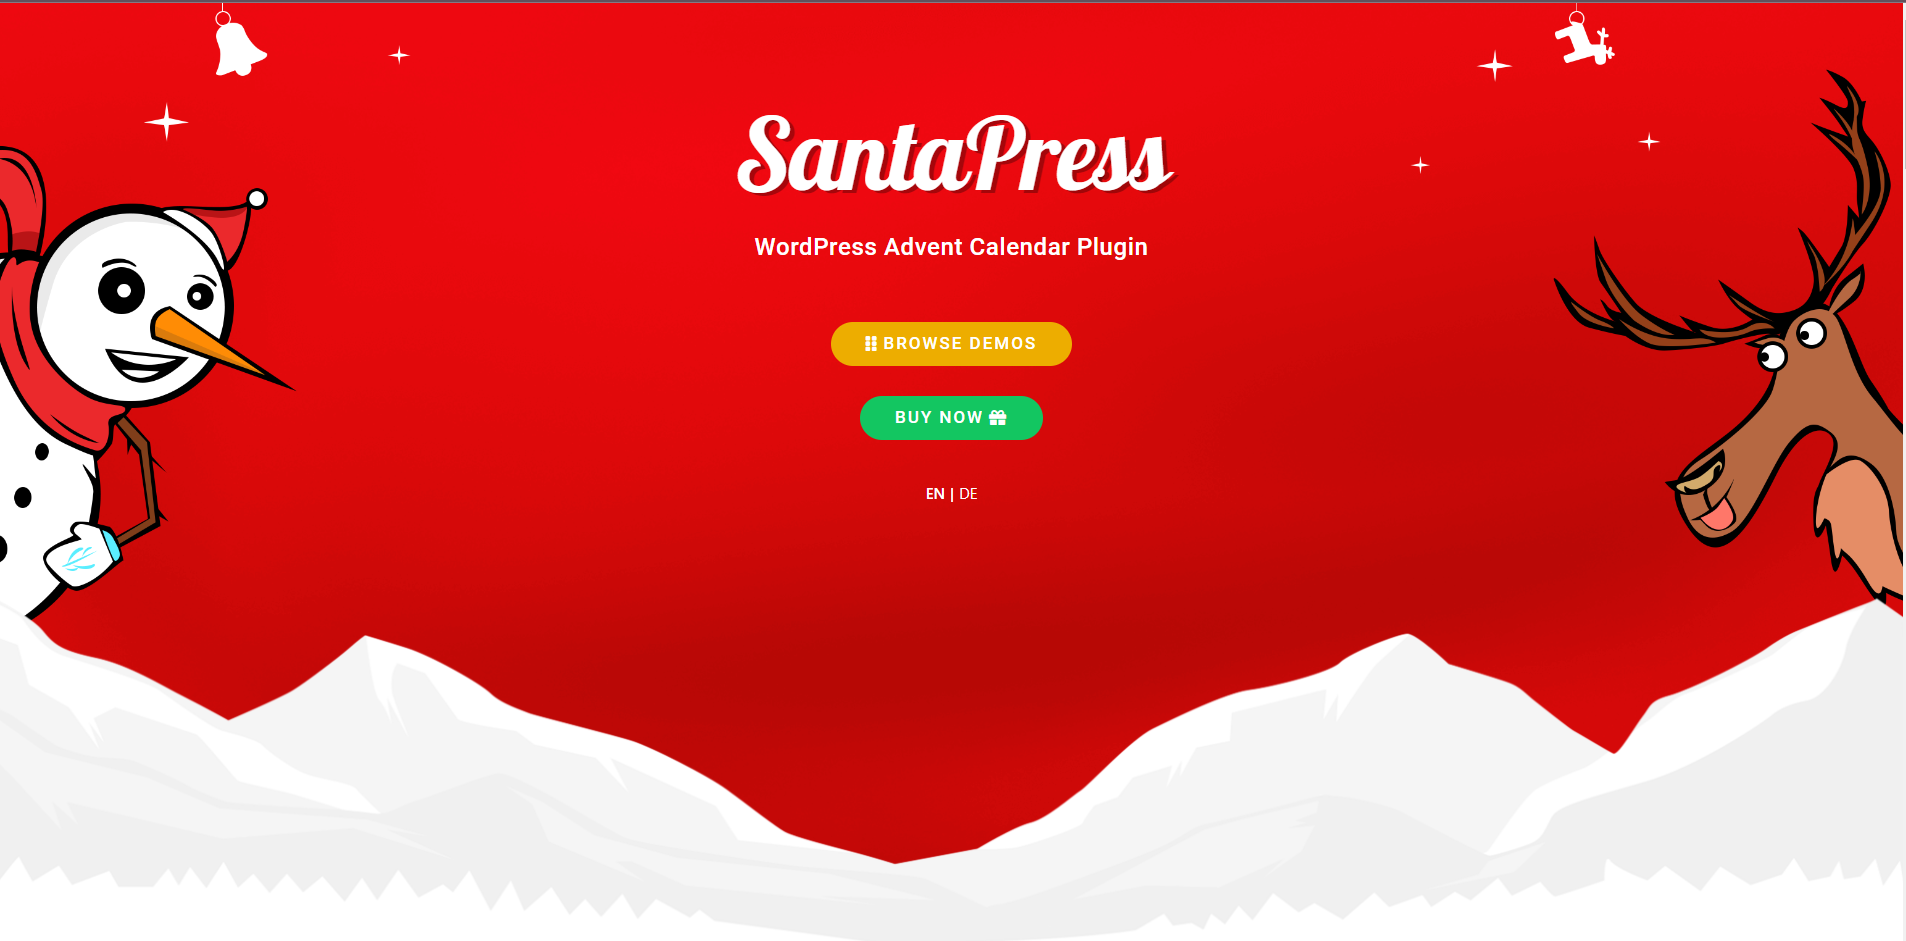 Santa Press Home page